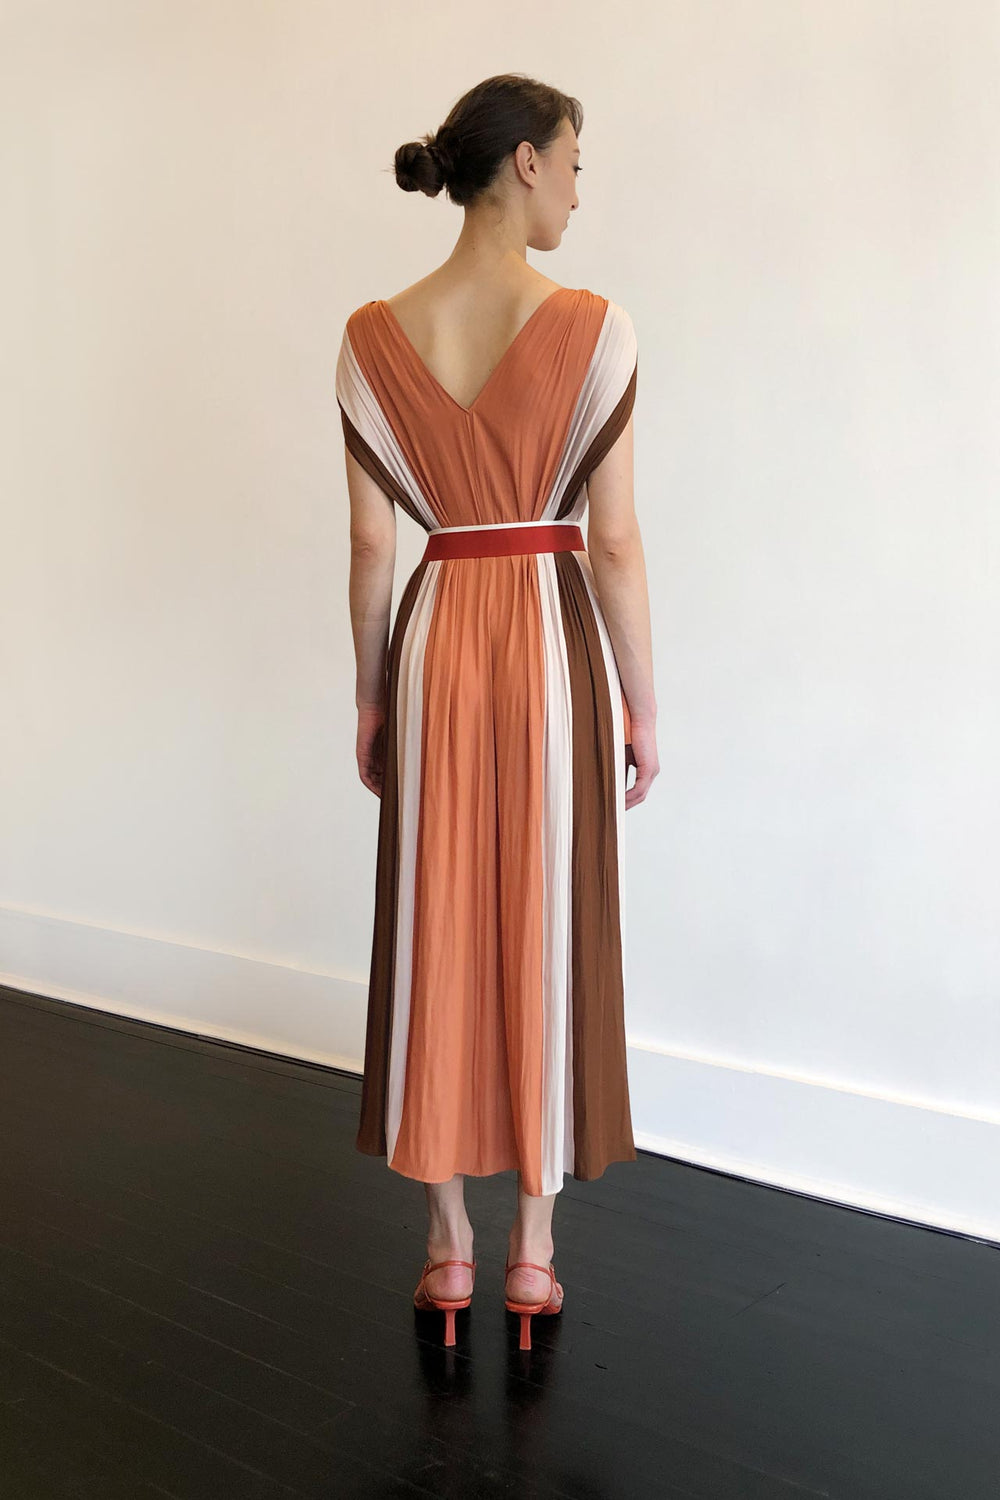 Fashion Designer CARL KAPP collection | Bel Air Onesize Fits All Dress Peach | Sydney Australia